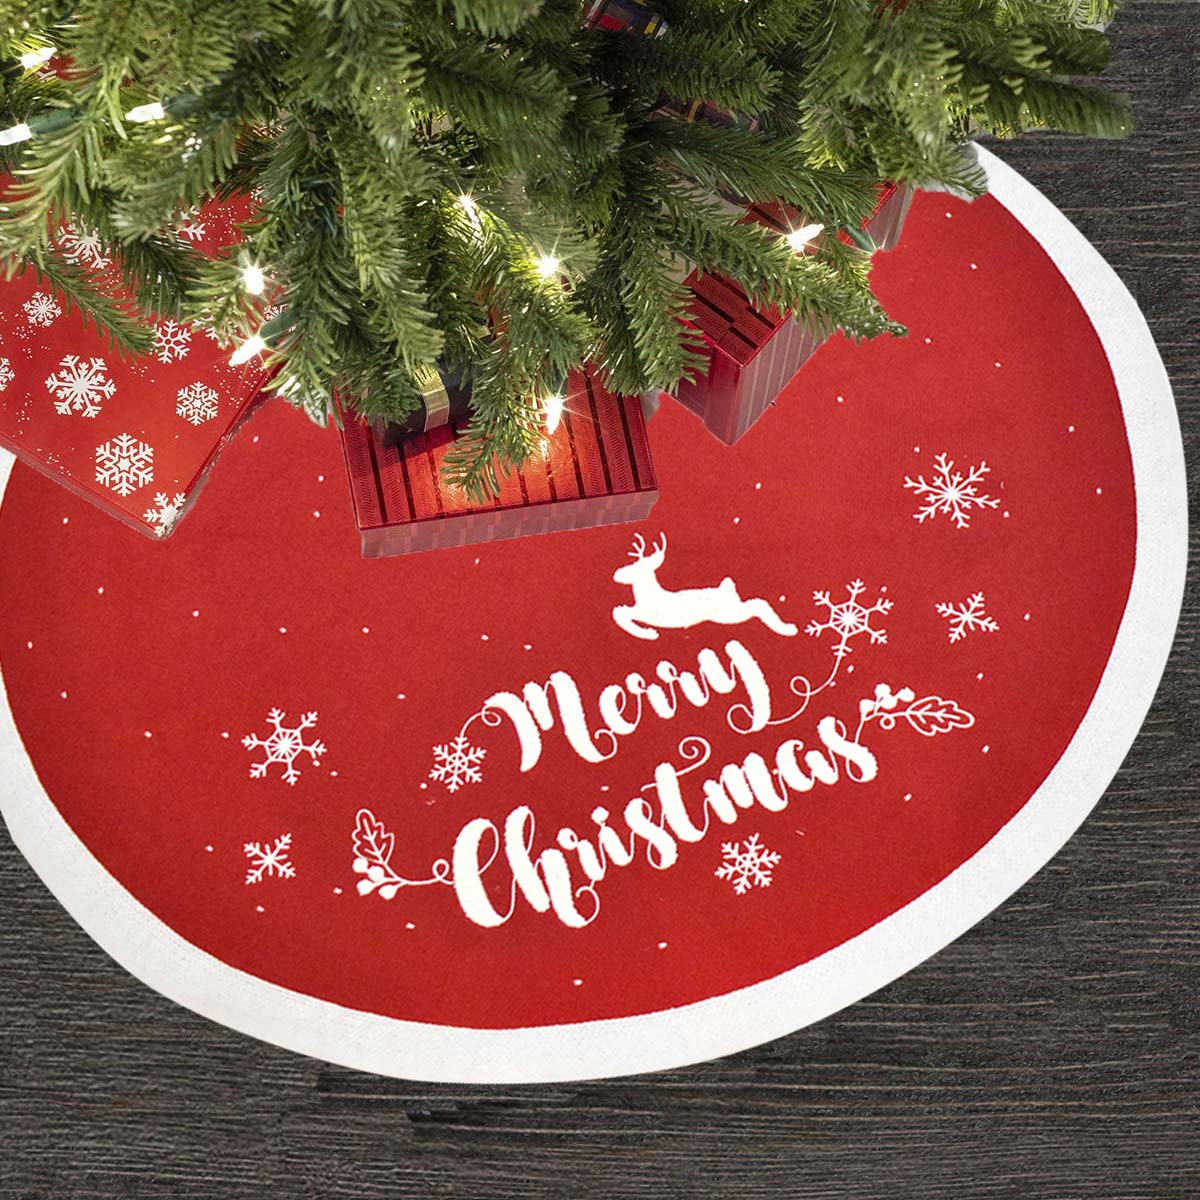 VeroMan クリスマス ツリースカート トナカイ柄 レッド ツリー 飾り 円型 結ぶ仕様 オーナメント デコレーション 雑貨 大きい 直径122cm